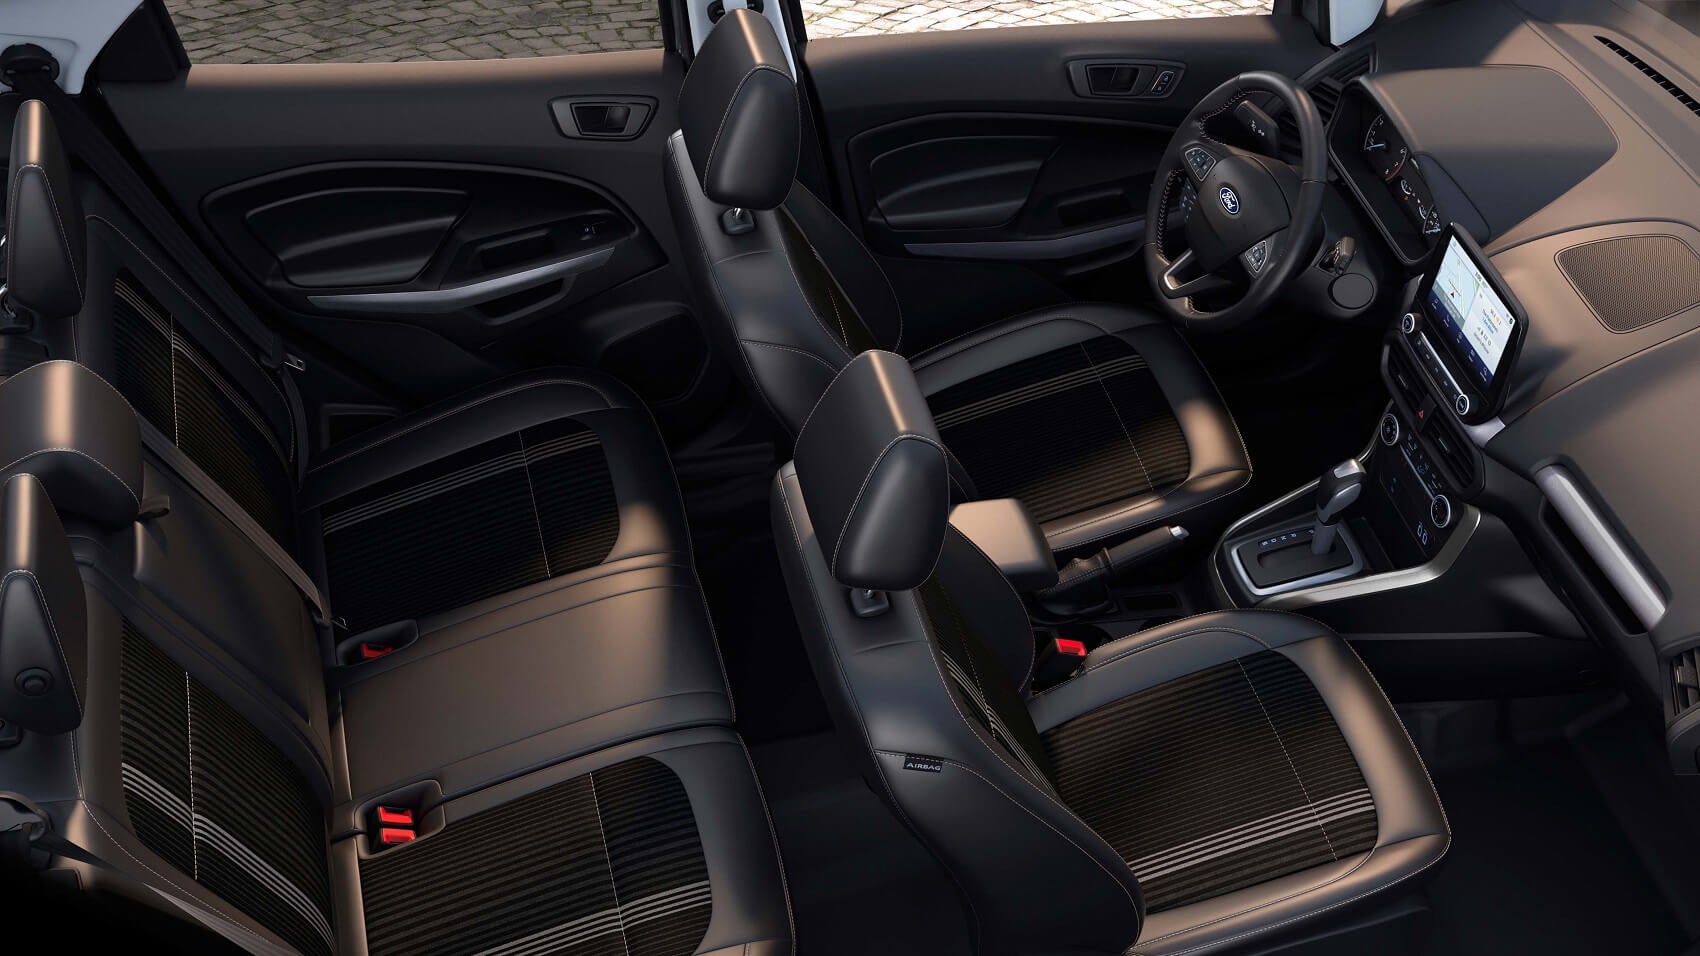 2021 Ford EcoSport Interior Review
